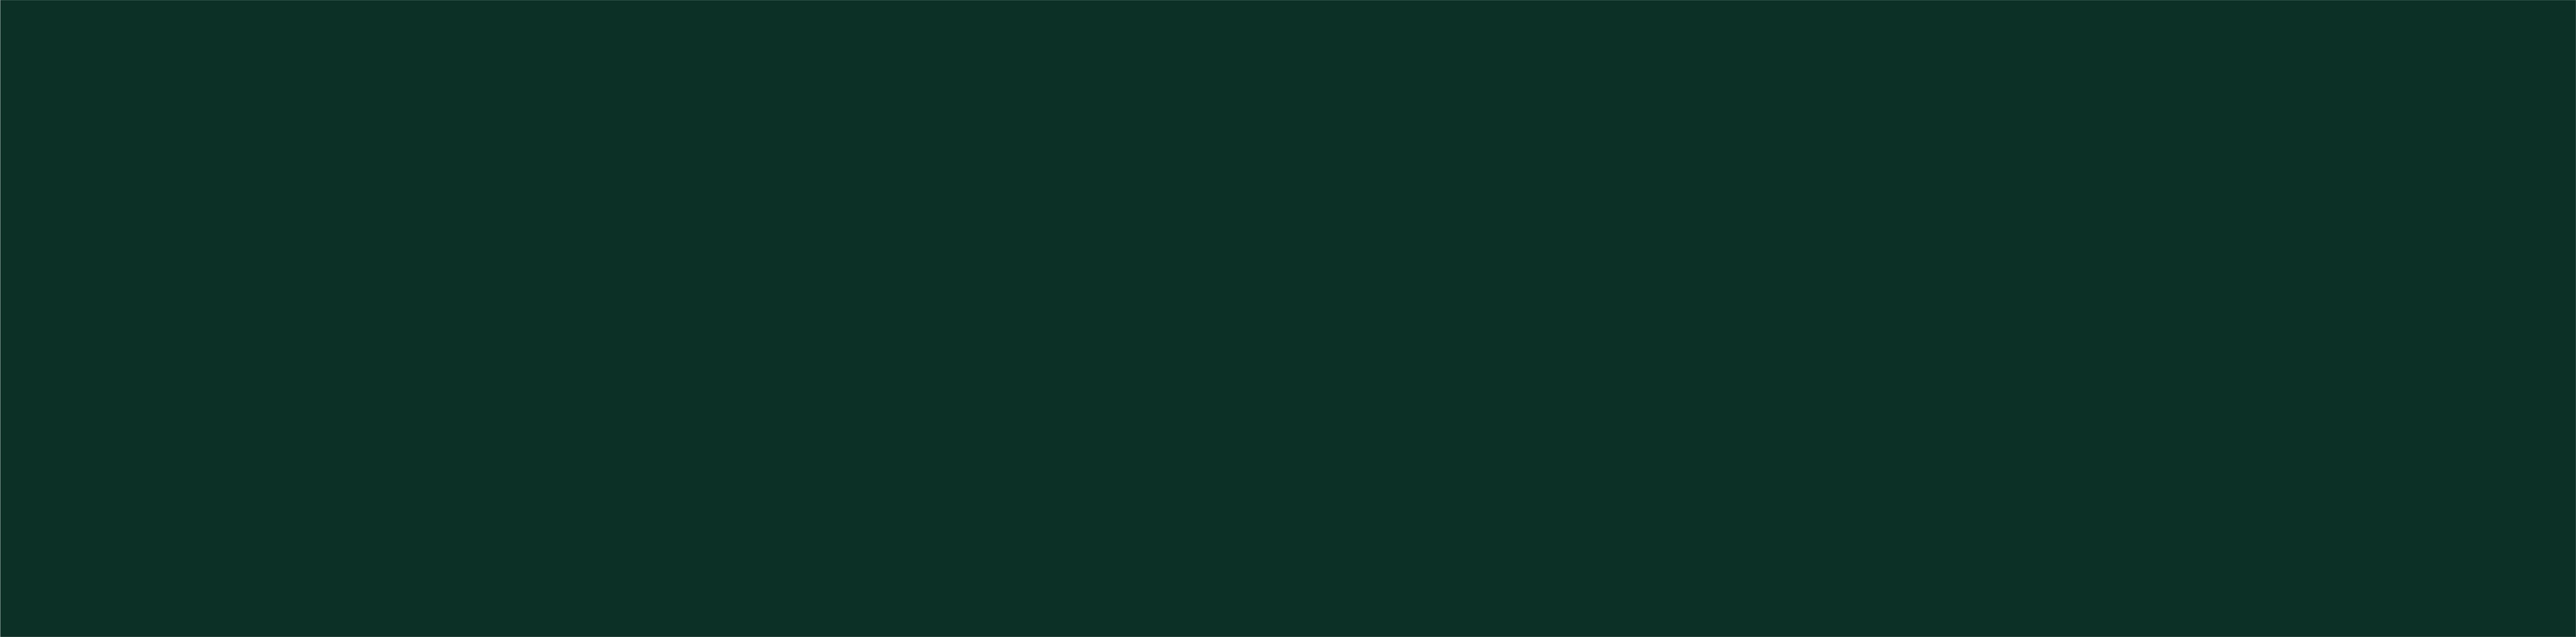 DefaultCardOverlay-Spruce box-2880×670 